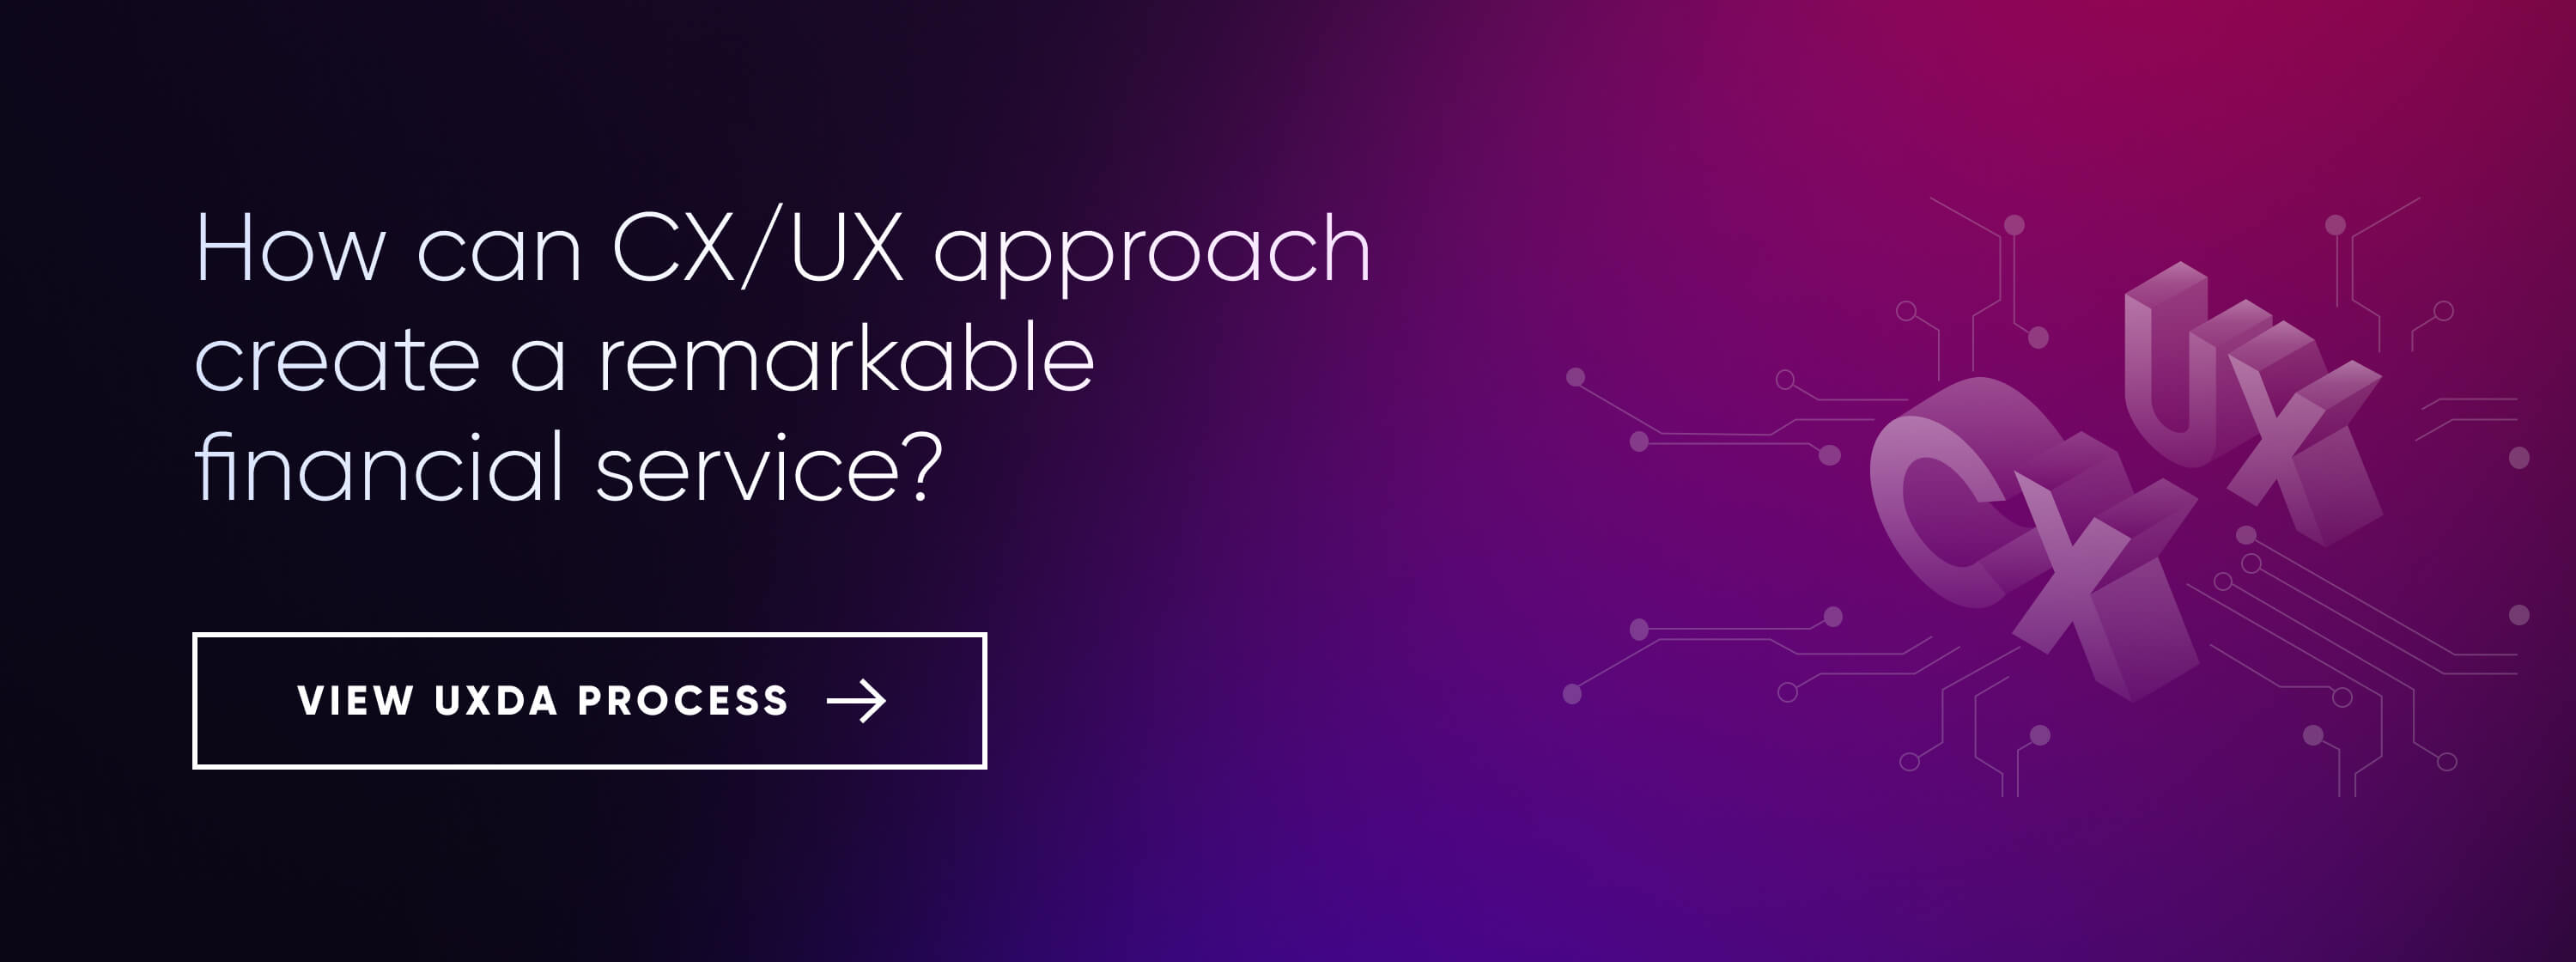 uxda-process-cx-ux-methodology-approach-remarkable-financial-service.jpg